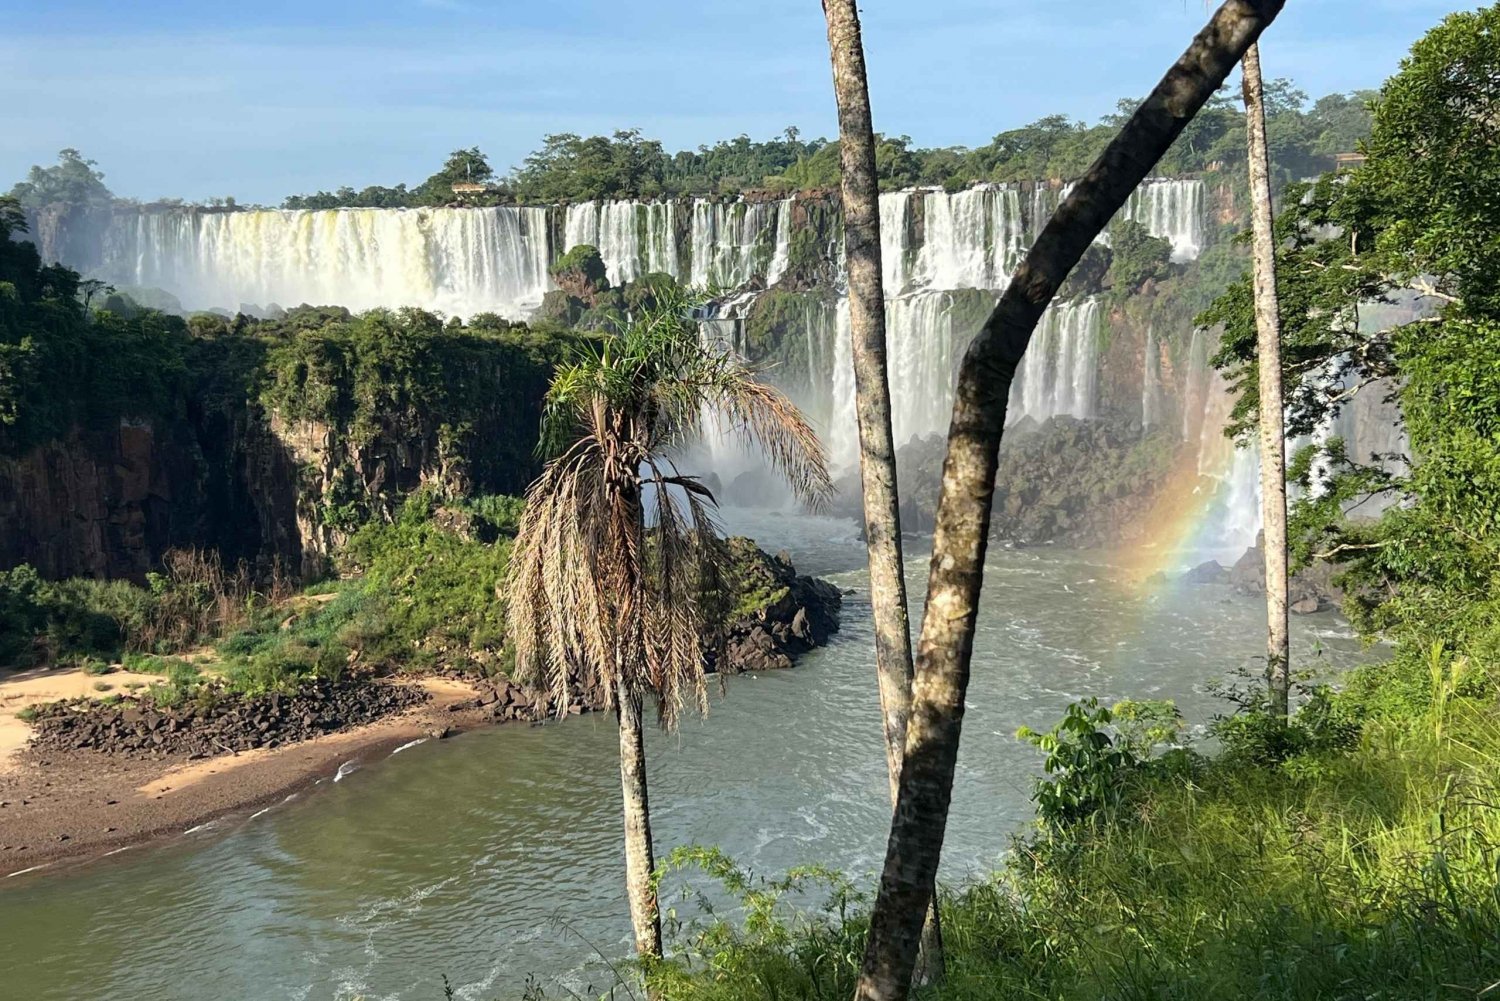 Guide and transport in Iguaçu Falls